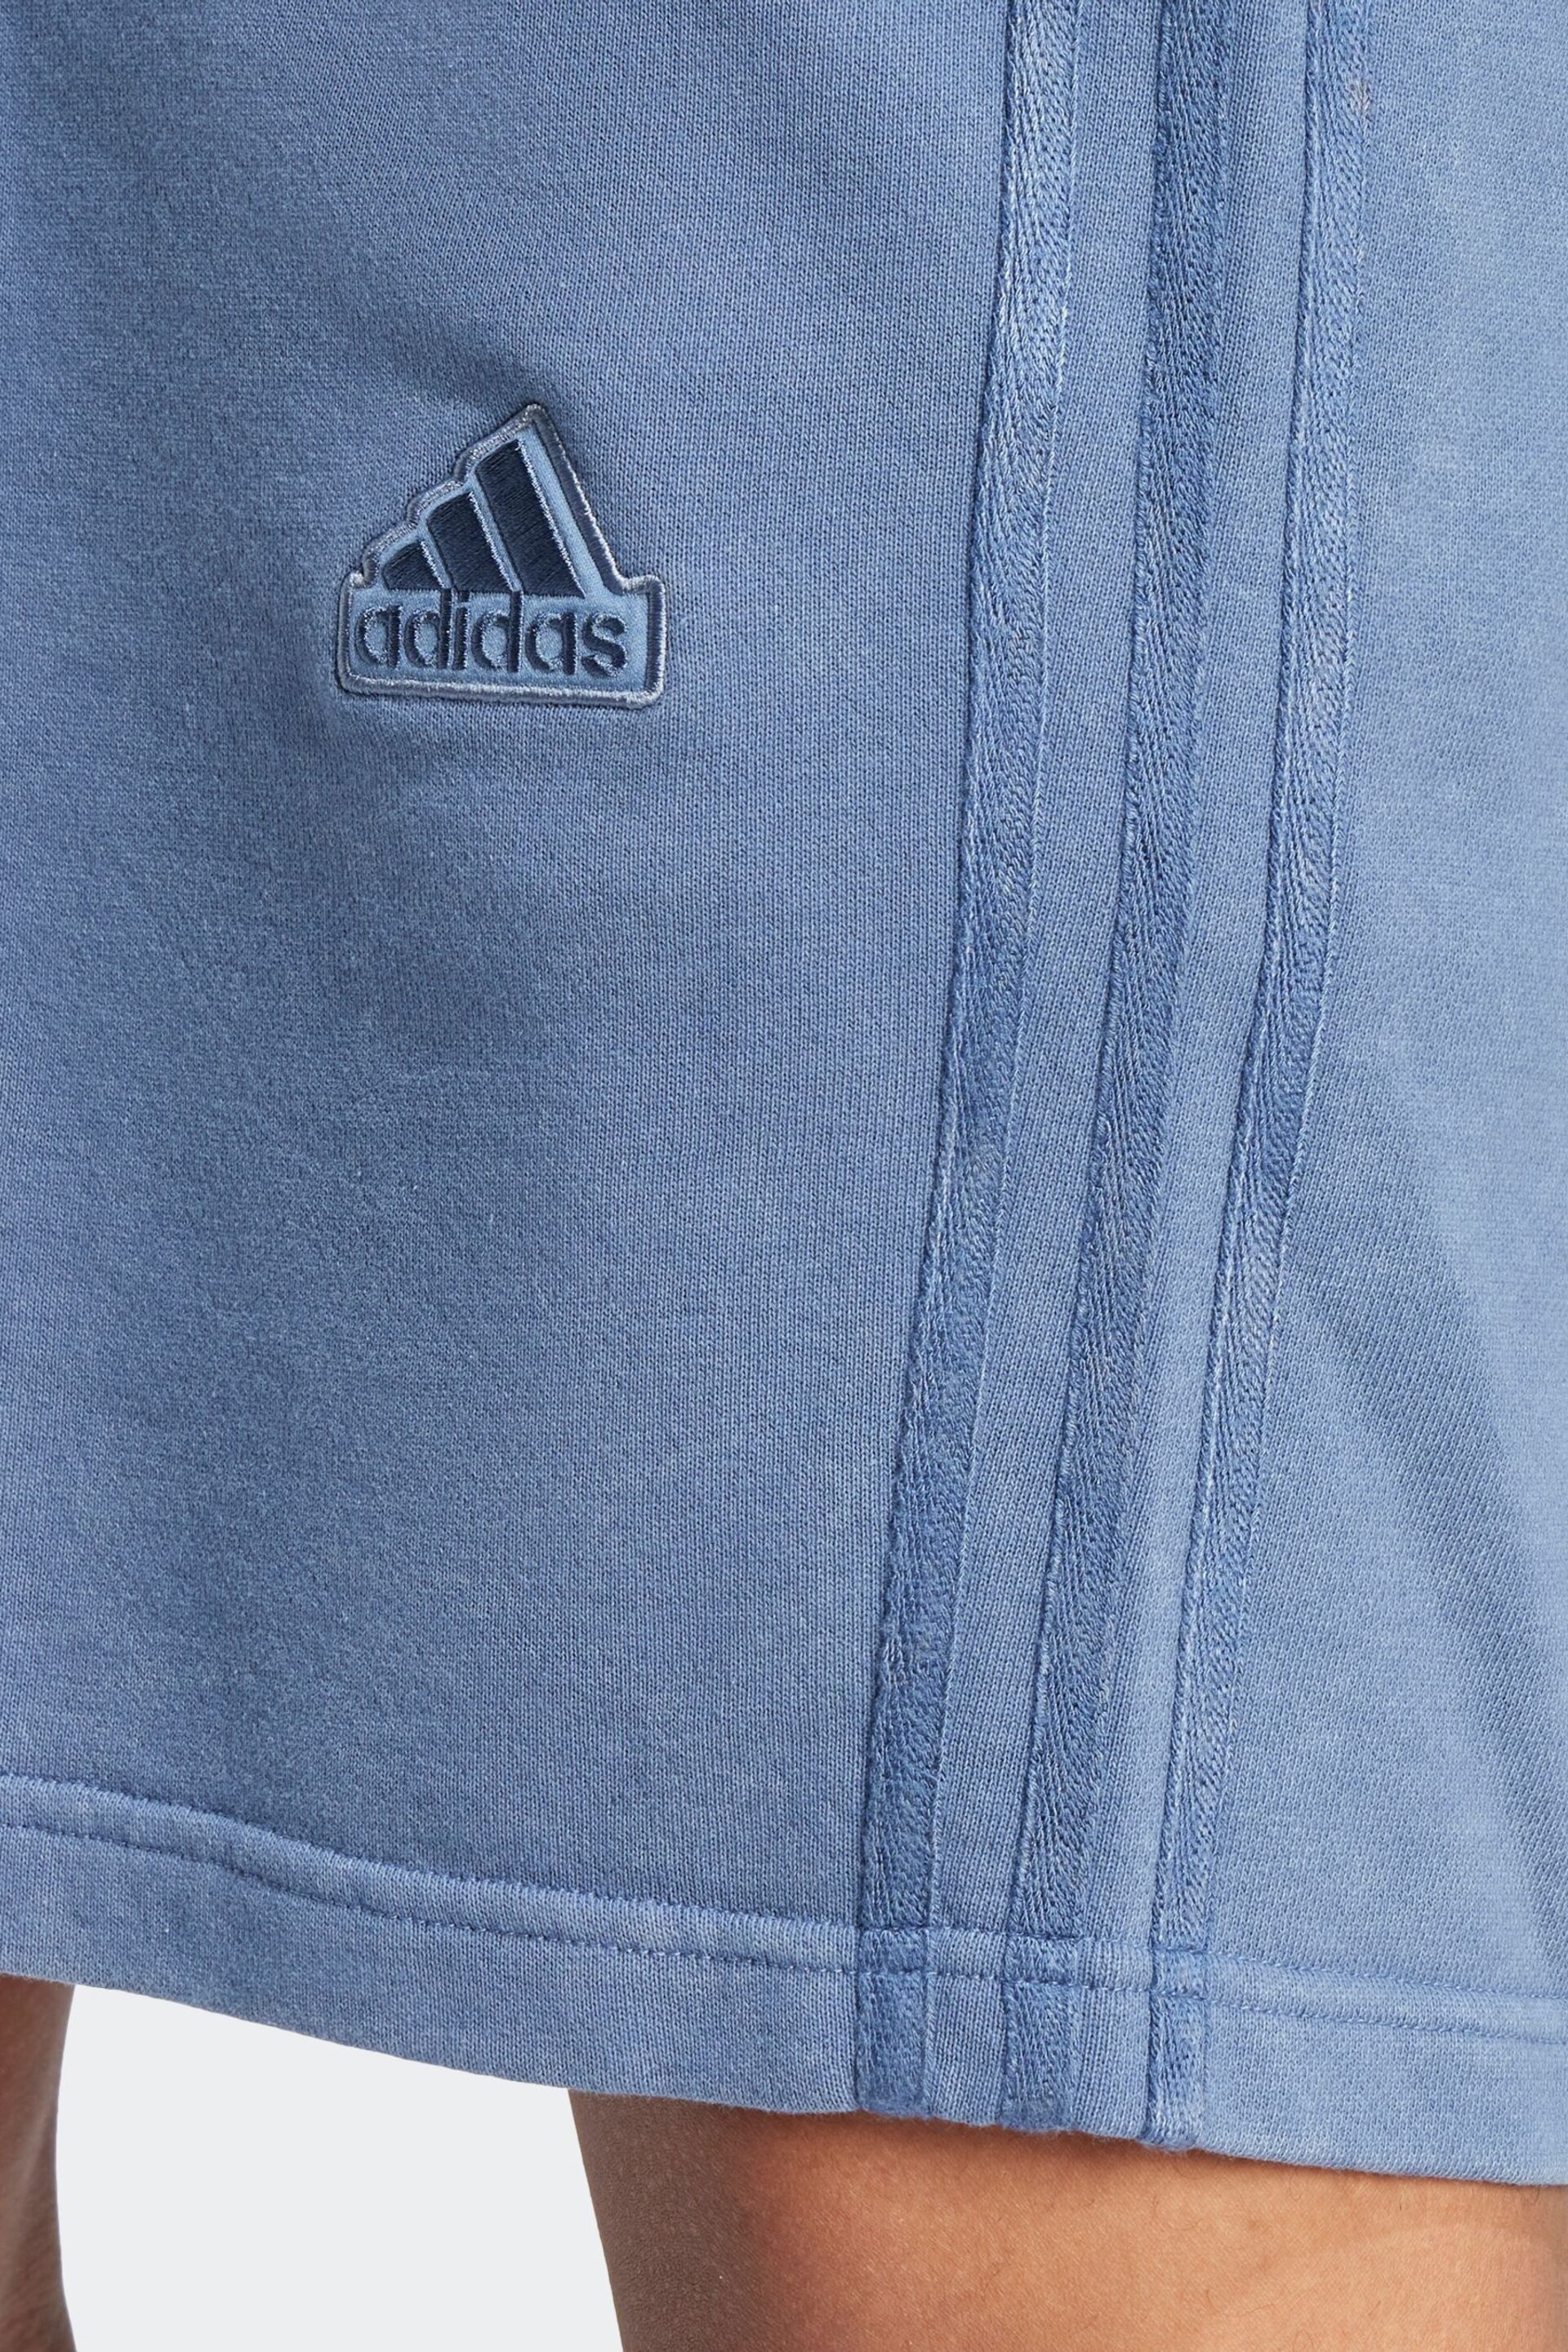 adidas Blue Sportswear All Szn French Terry 3-Stripes Garment Wash Shorts - Image 5 of 6